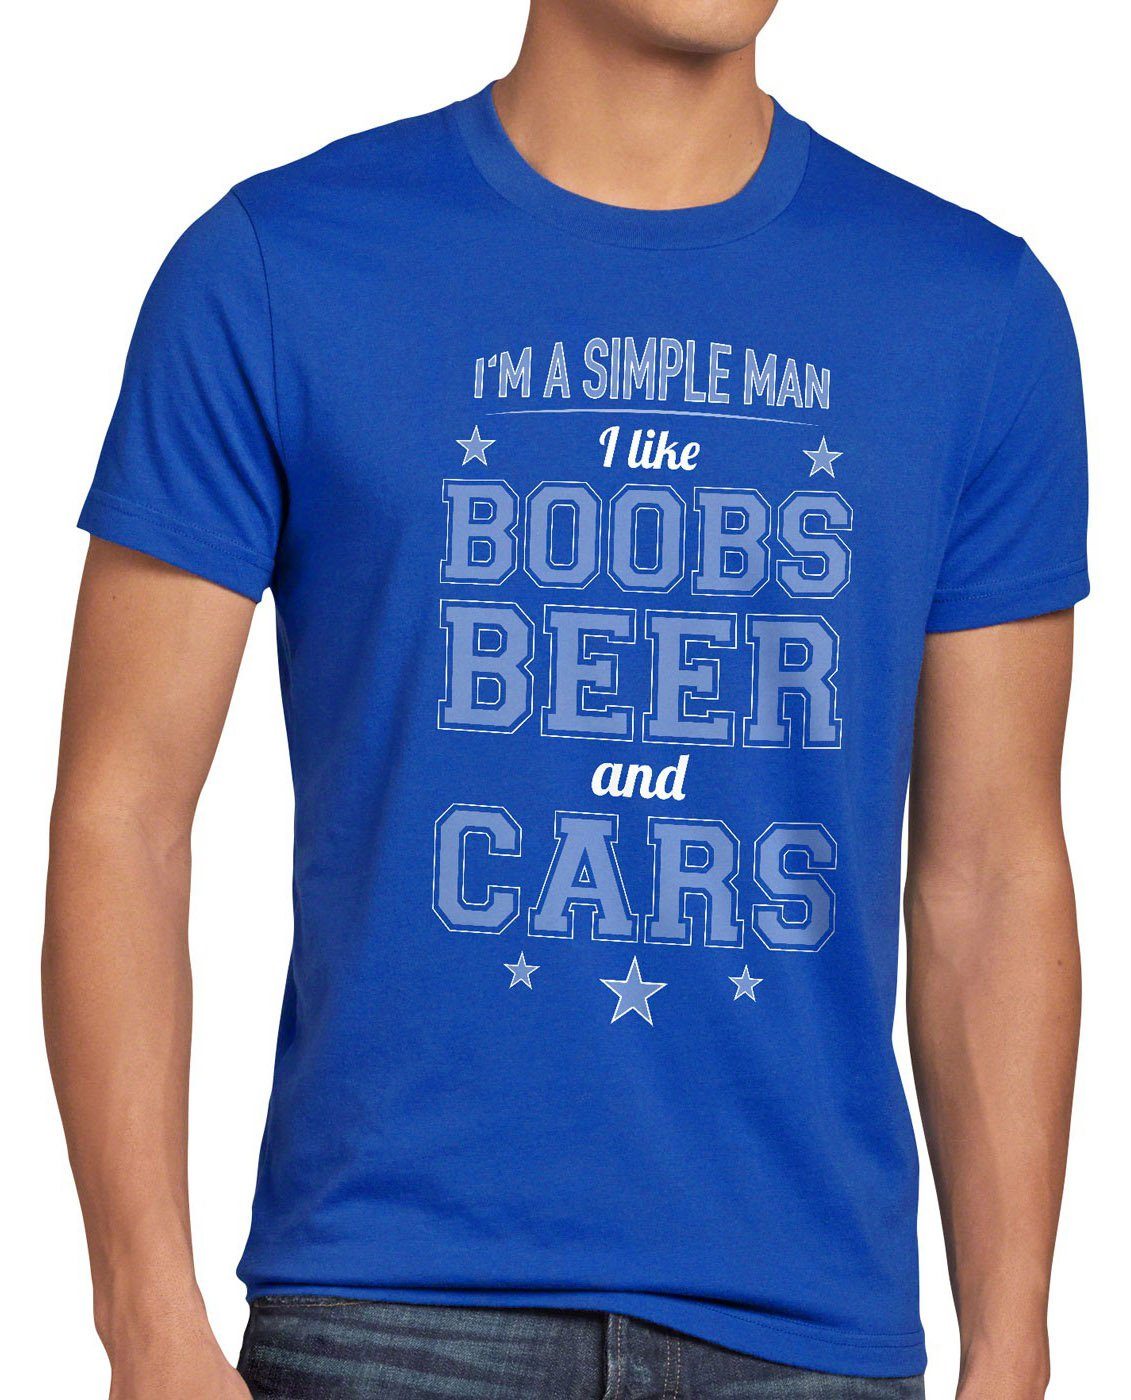 style3 Print-Shirt Herren T-Shirt Simple Man boobs beer car auto bier titten funshirt tuning spruch blau